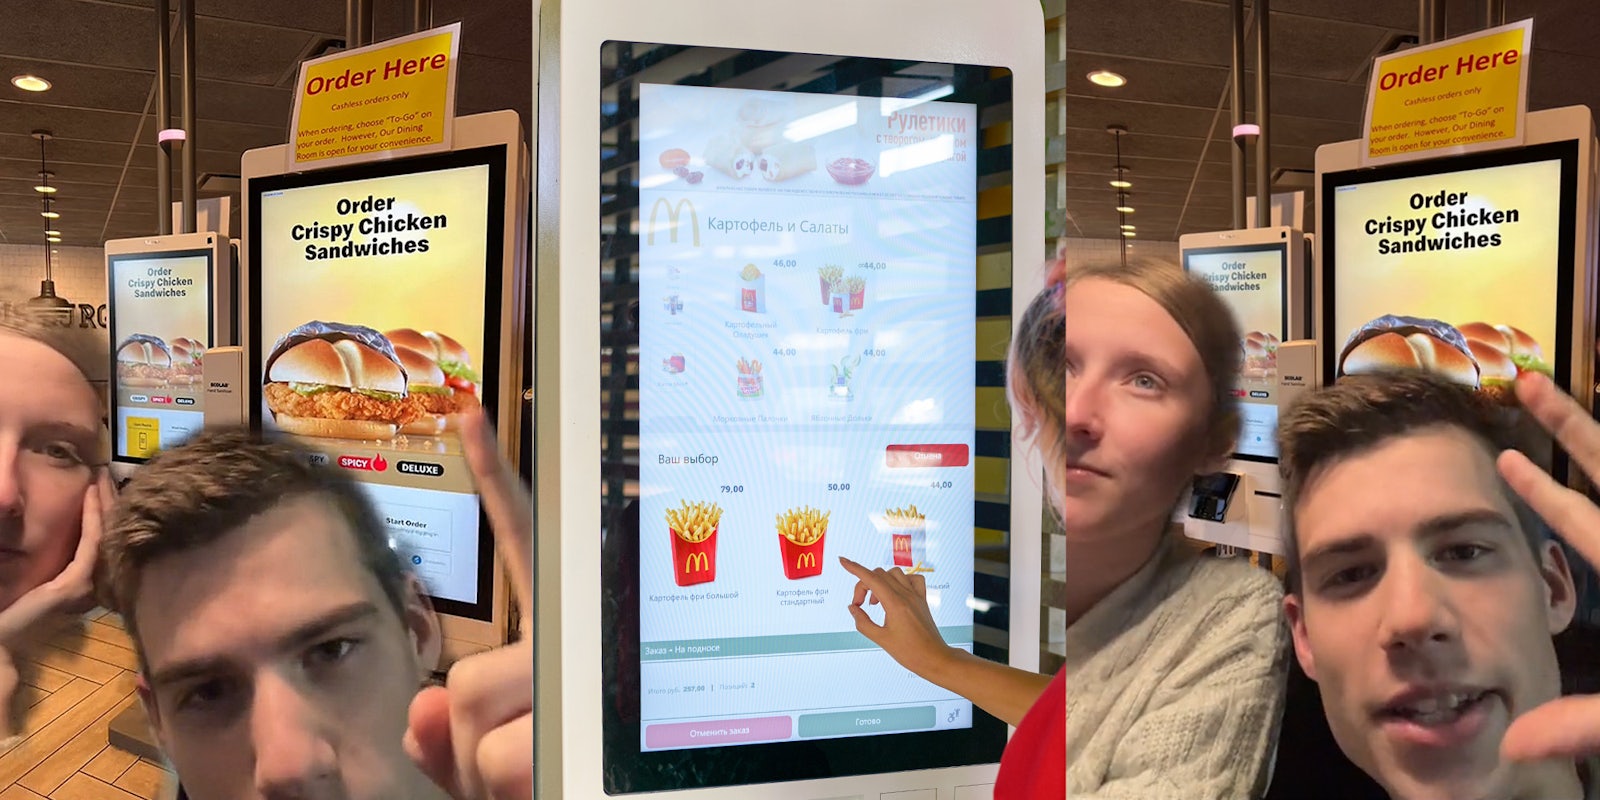 man and woman greenscreen TikTok over image of McDonald's order kiosk (l) woman pressing McDonald's kiosk screen (c) man and woman greenscreen TikTok over image of McDonald's order kiosk (r)